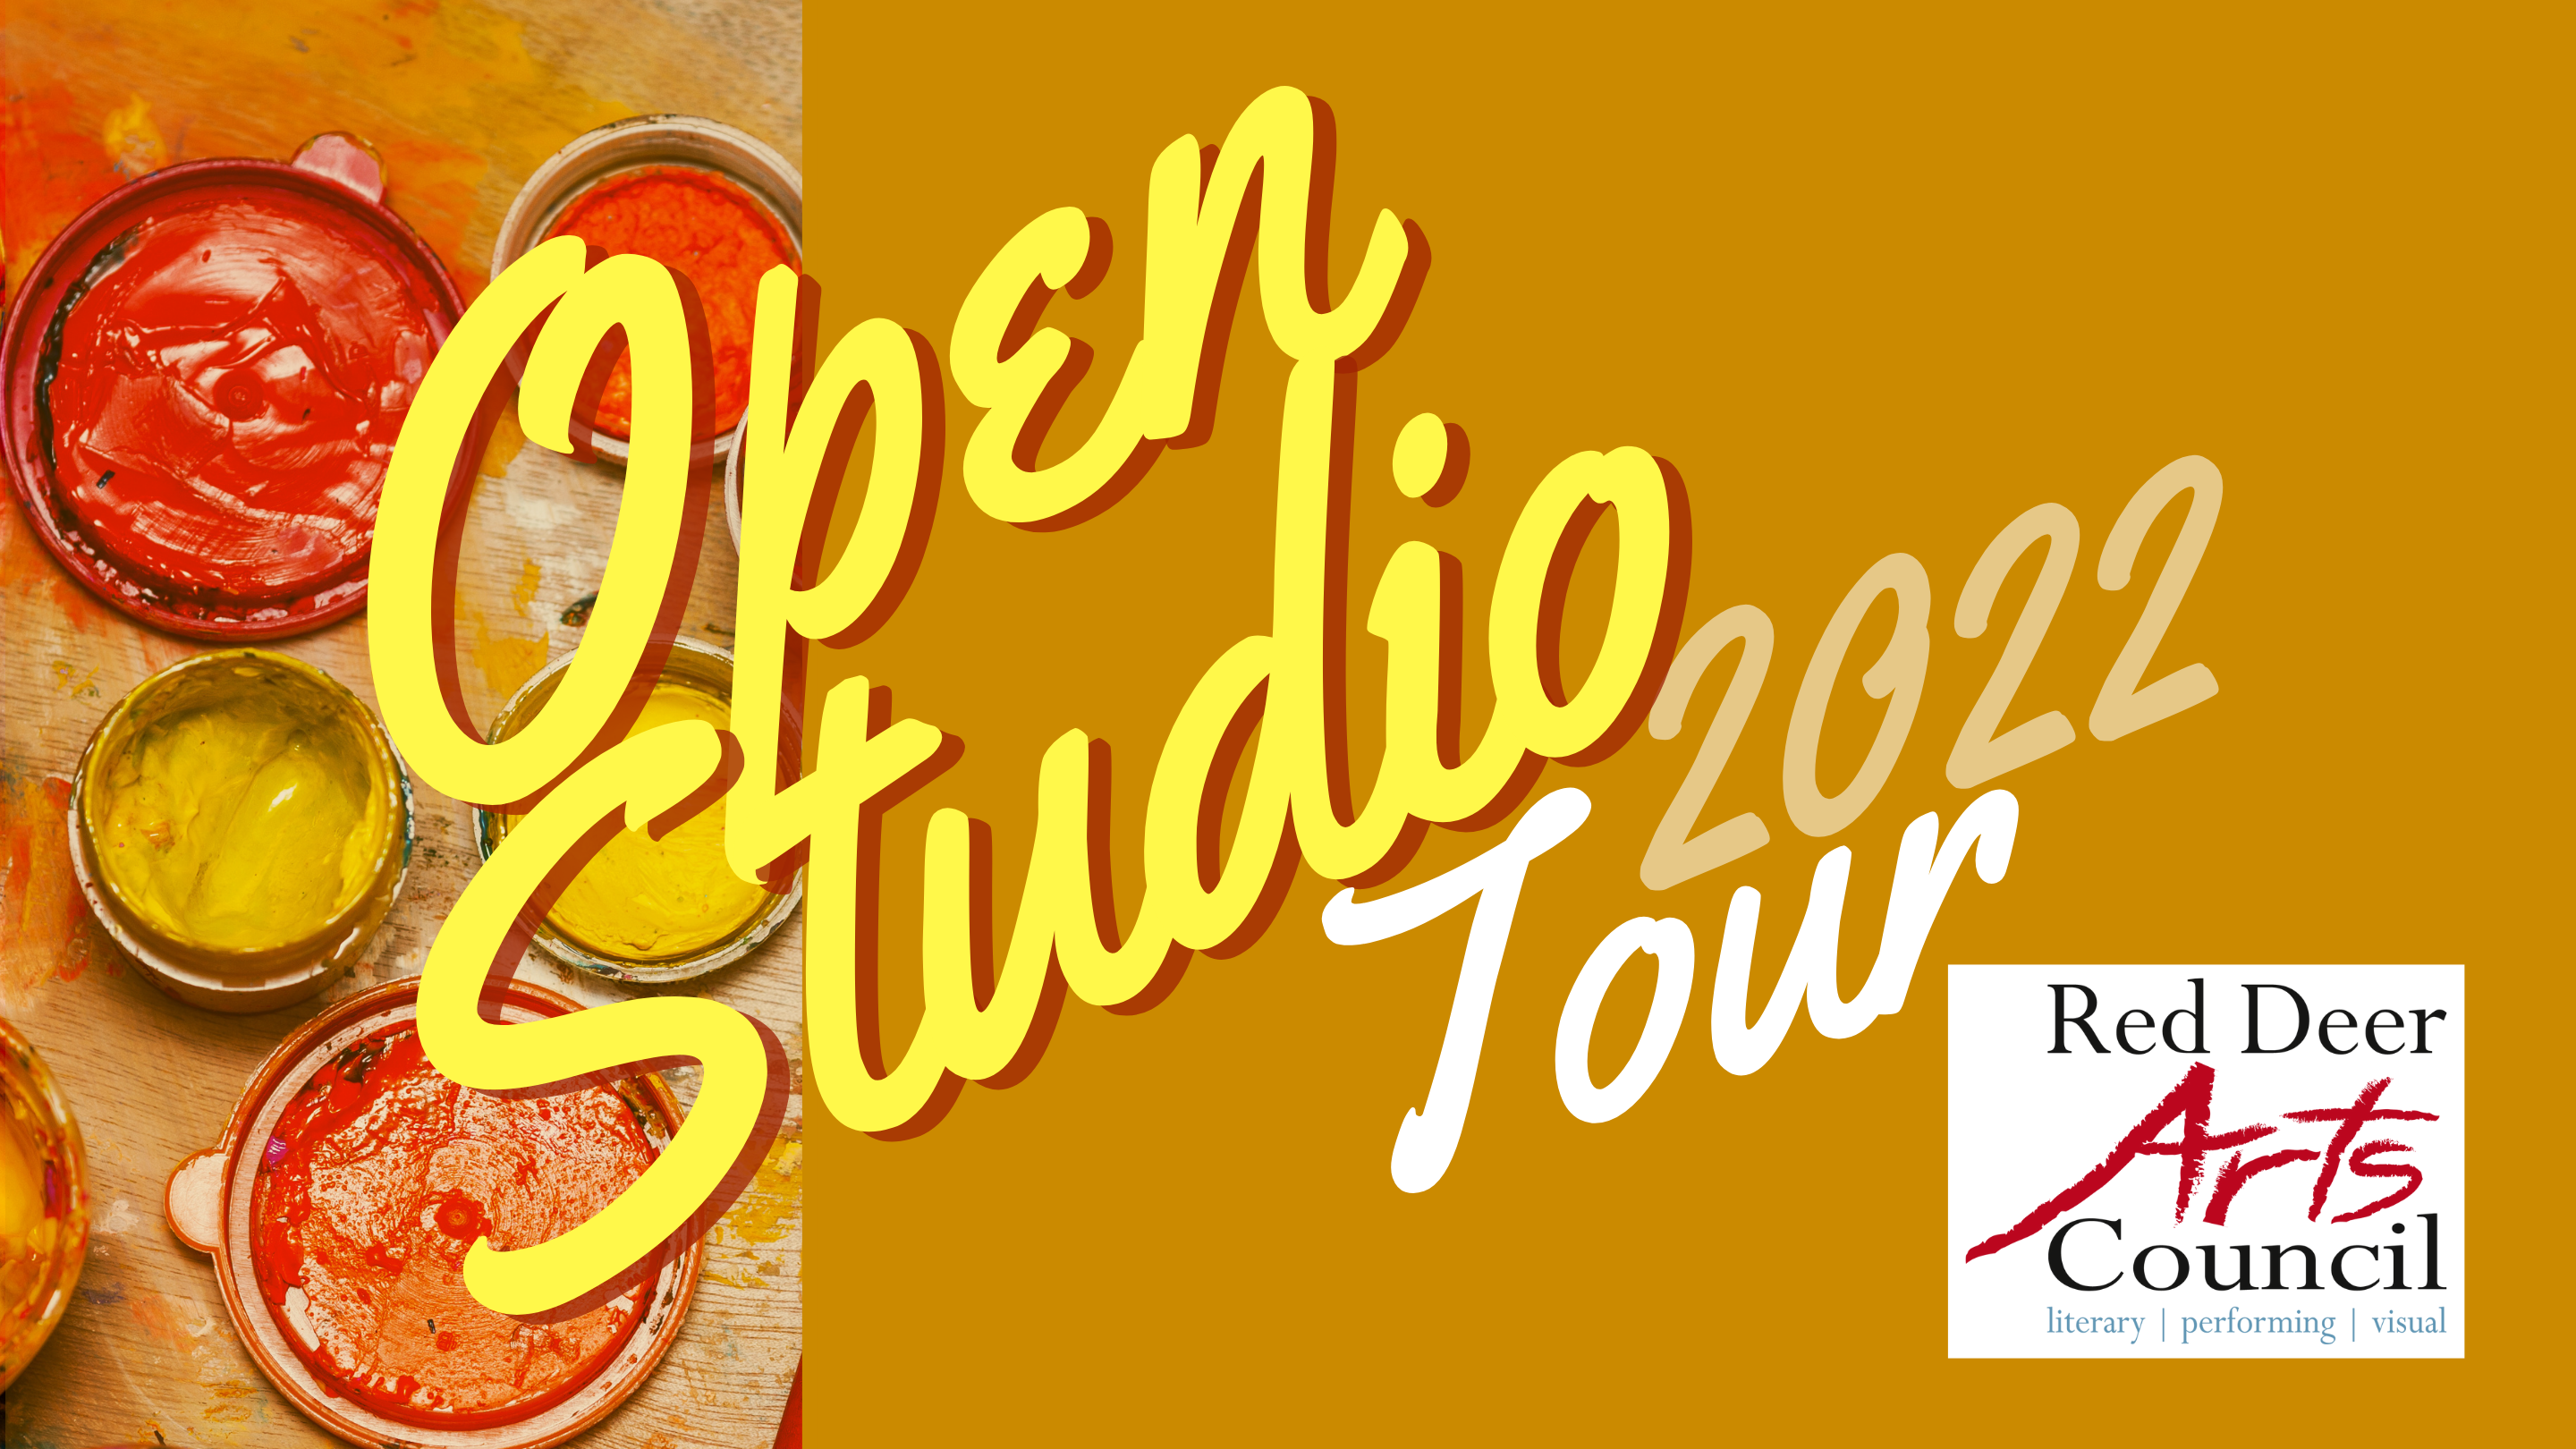 Red Deer Arts Council's Open Studio Tour - Alberta Culture Days